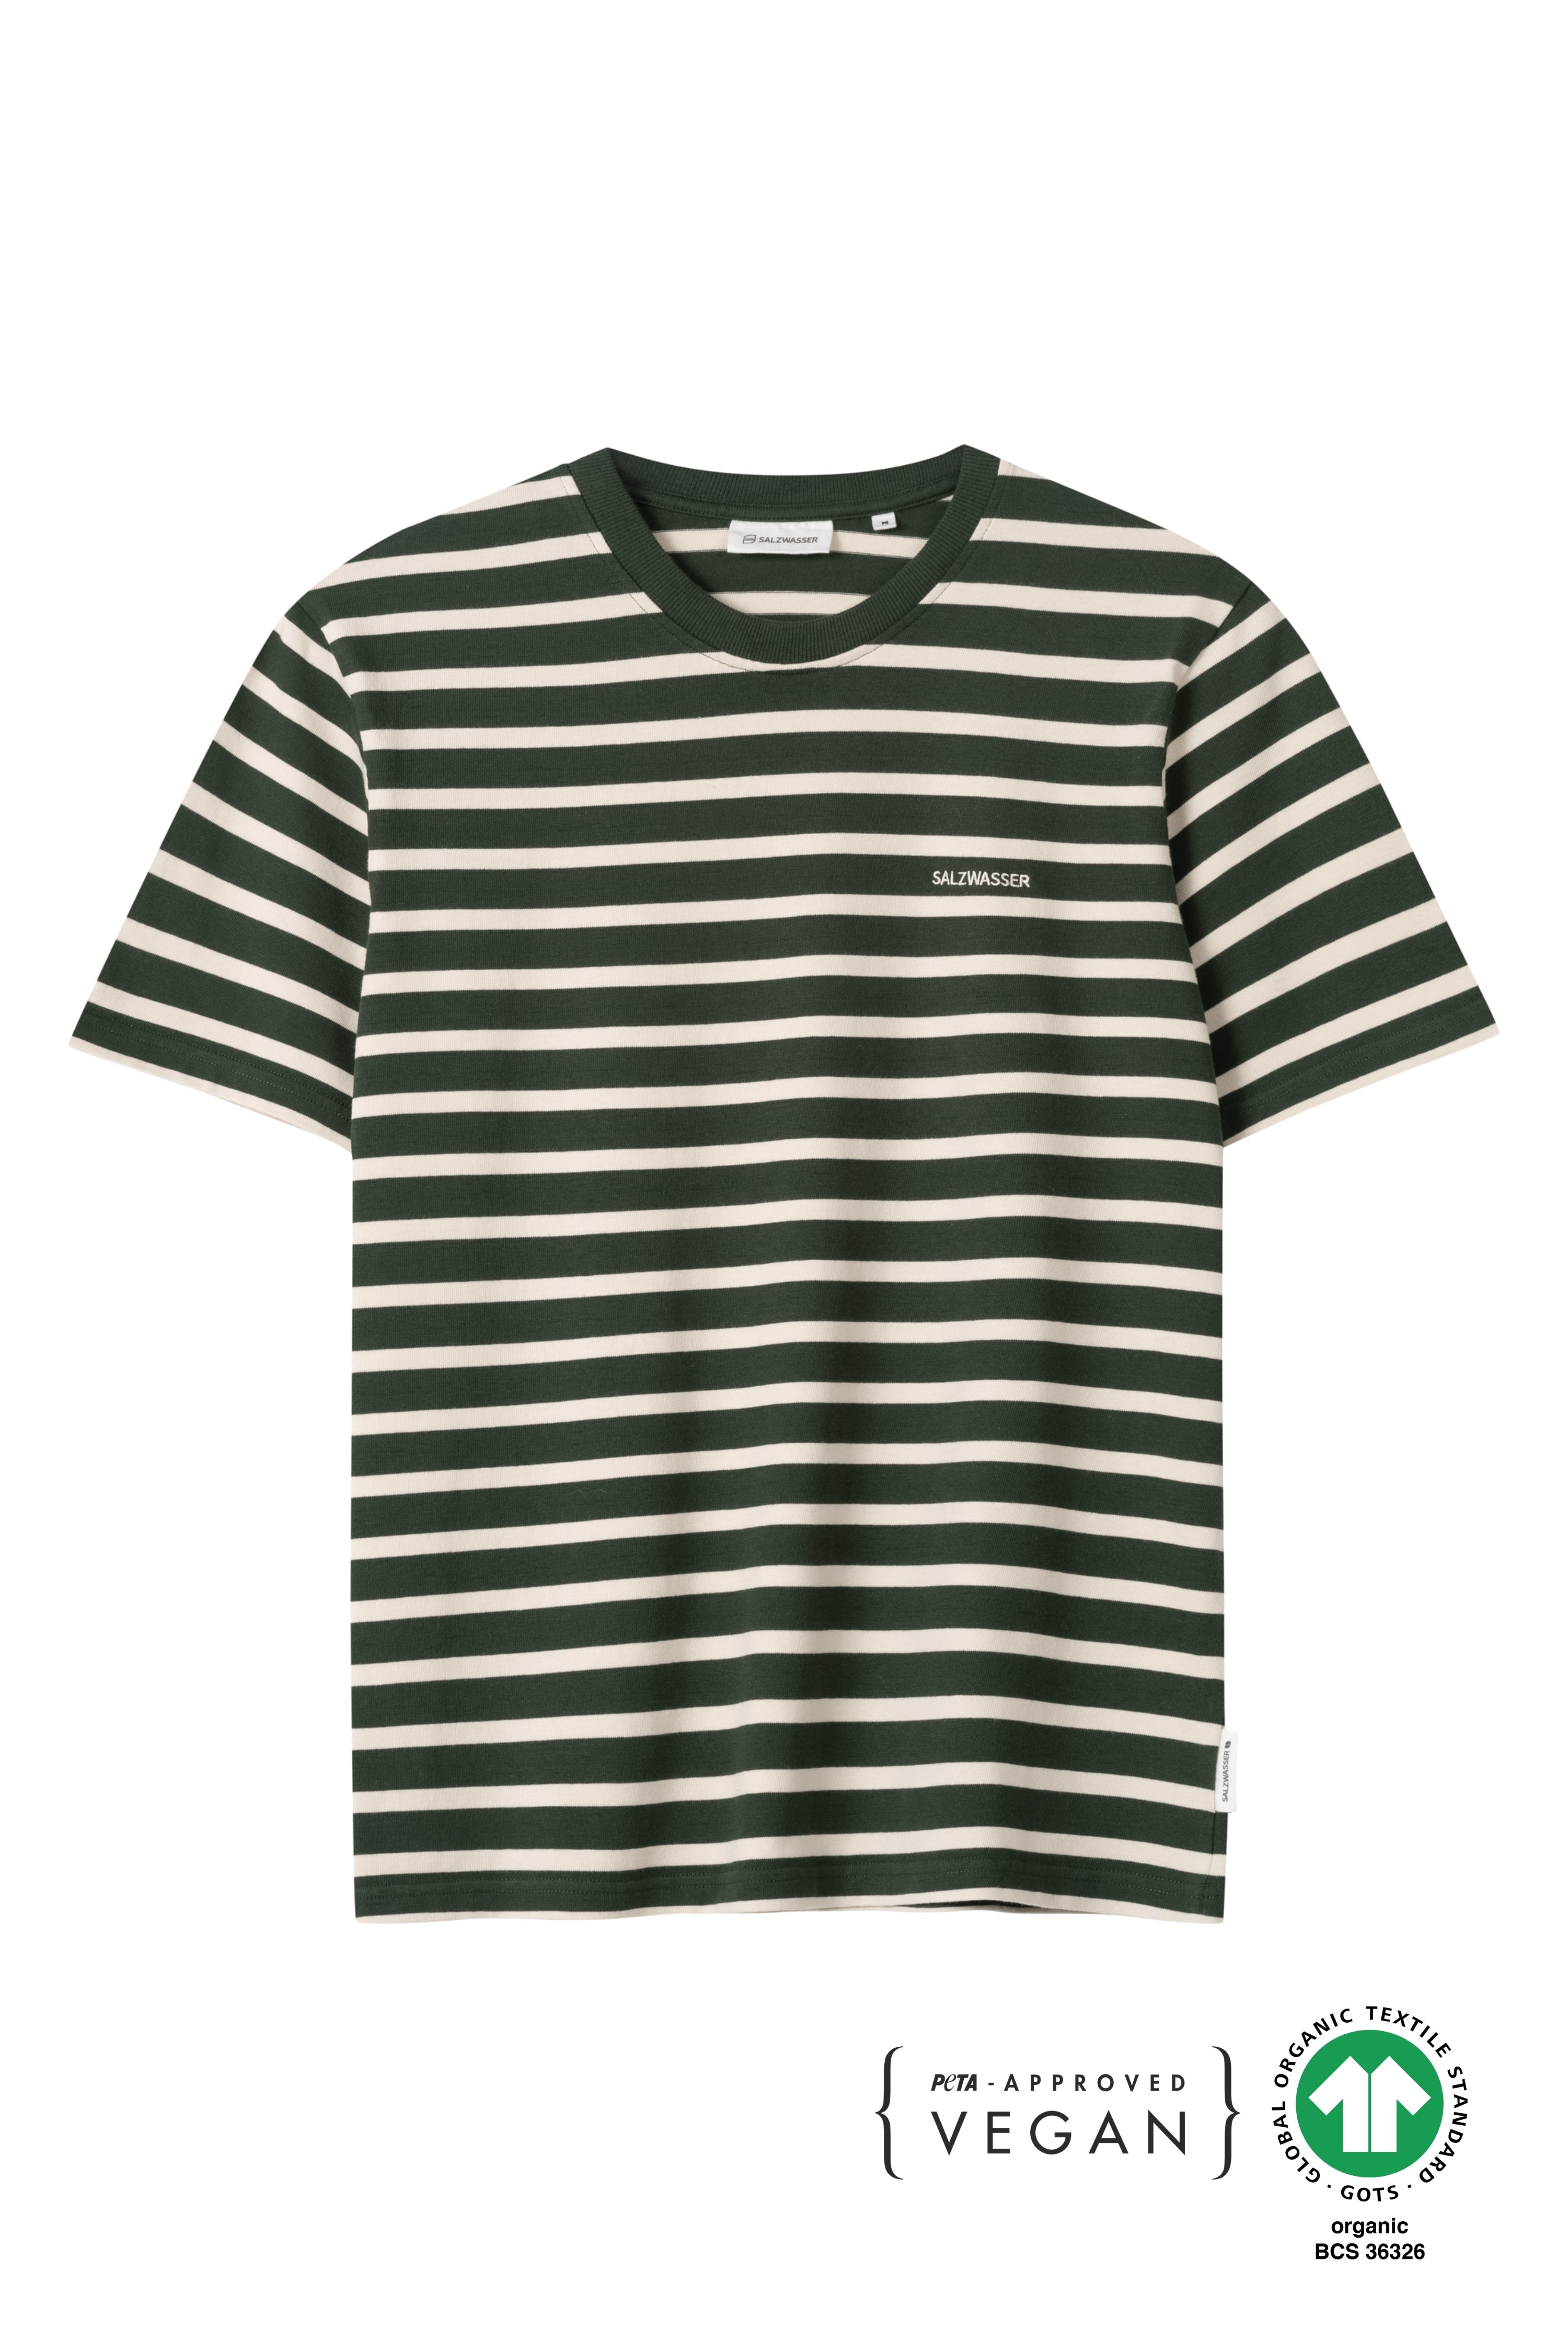 Olive Striped T-Shirt Jasper made from organic cotton by Salzwasser